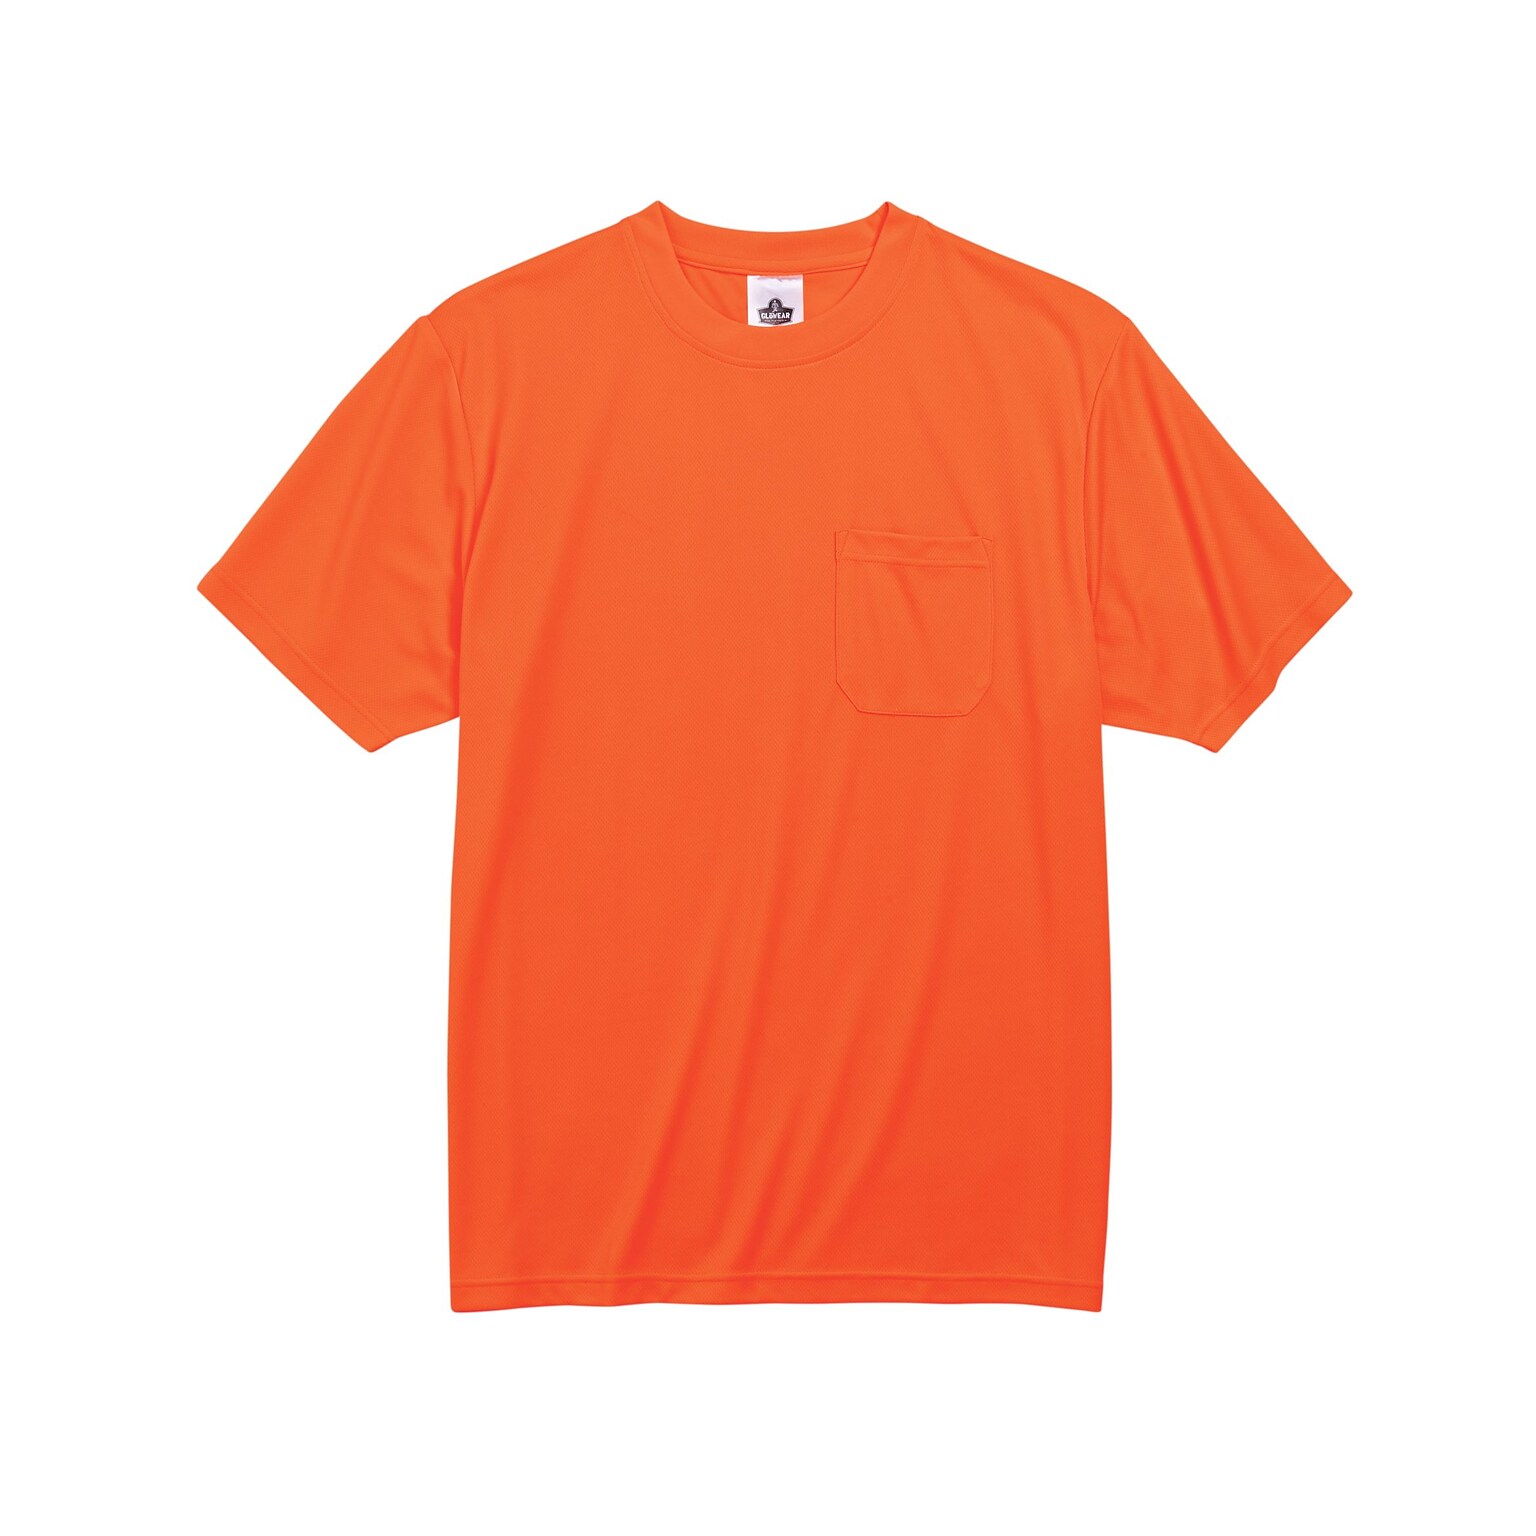 Ergodyne GloWear 8089 High Visibility Short Sleeve T-Shirt, Orange, Large (21564)